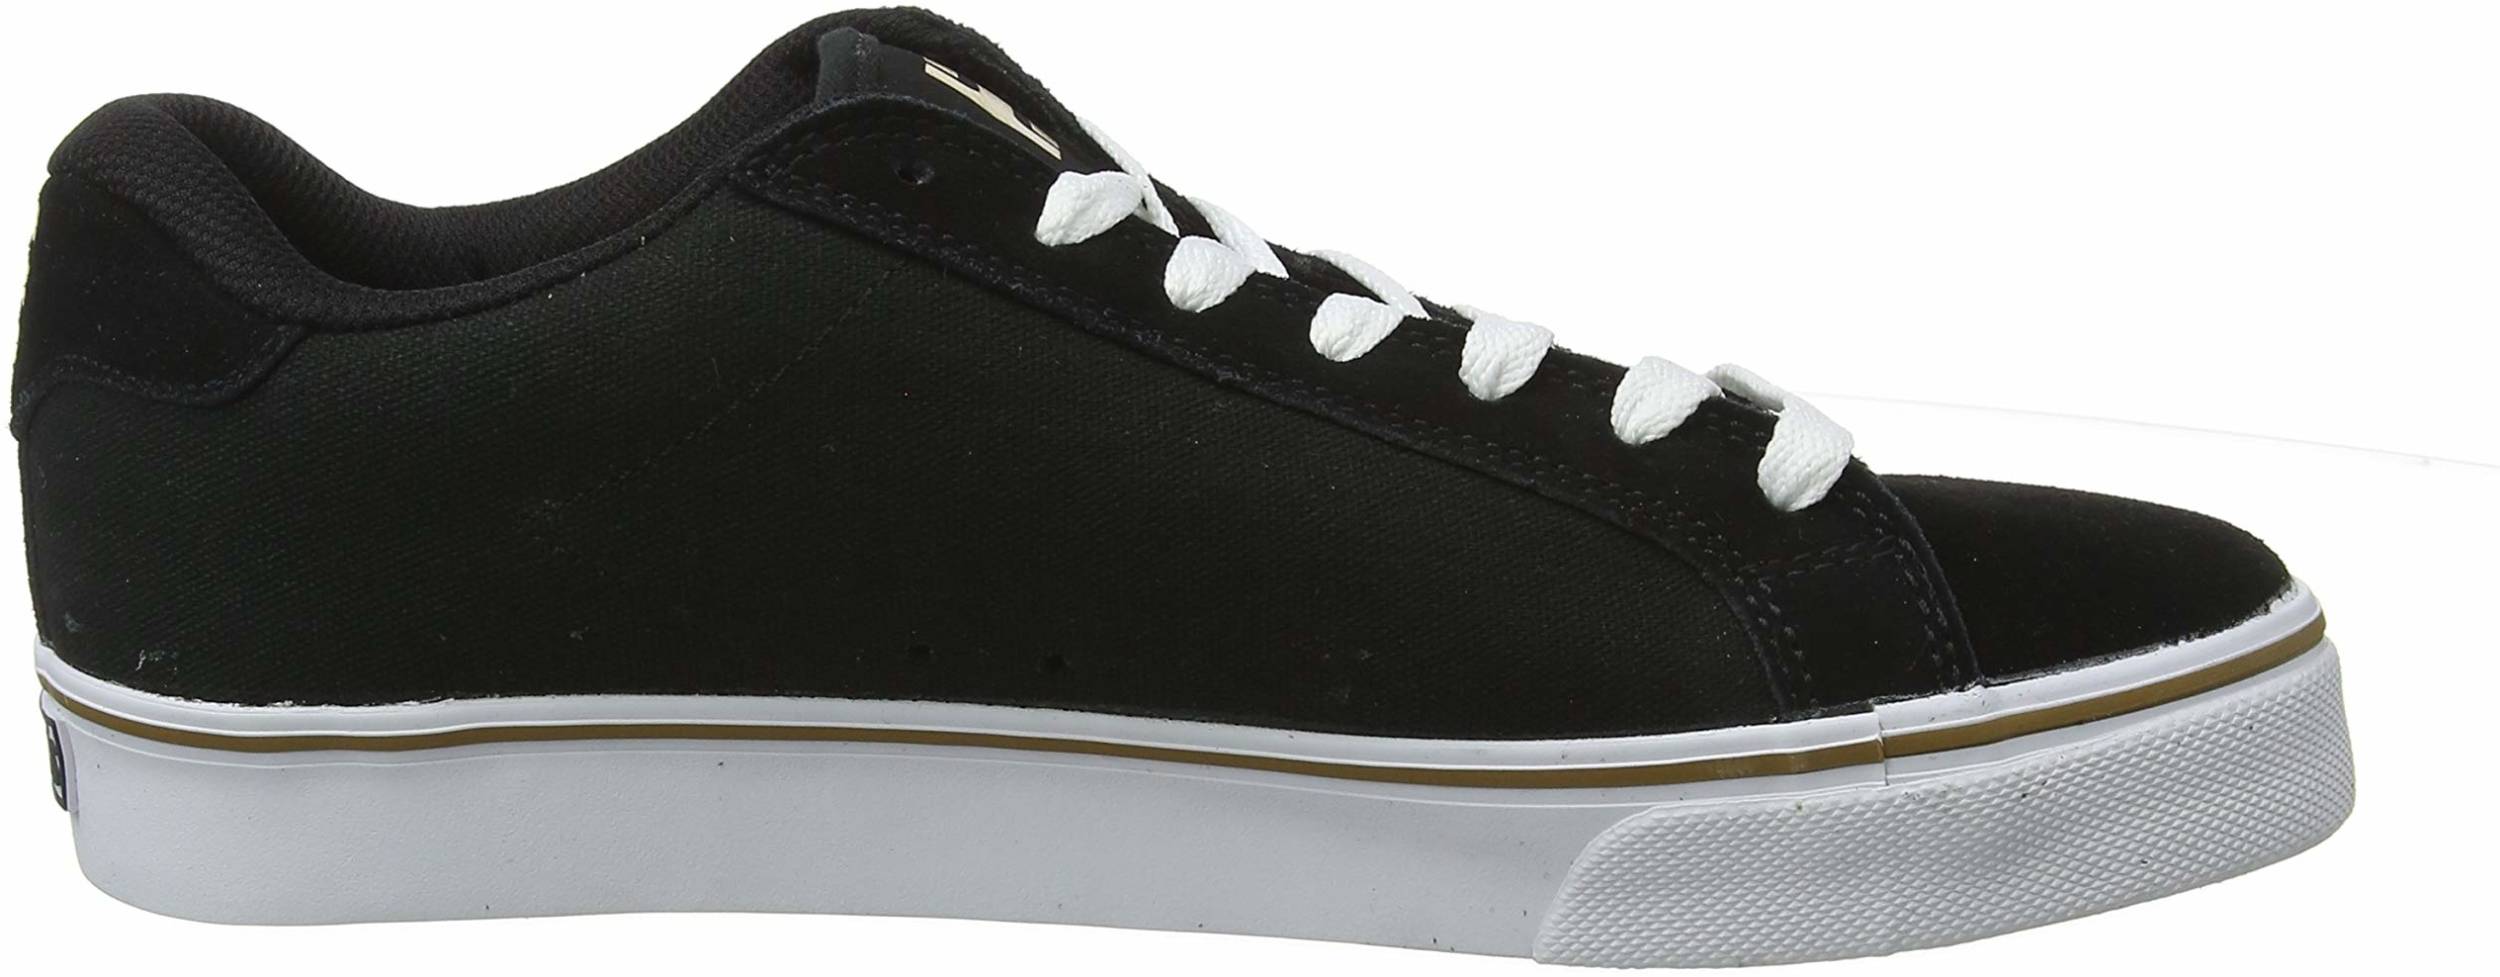 Etnies Men's Fader Vulc Low Top Sneaker Shoes Black/Black/Gum Footwear Skateboar 